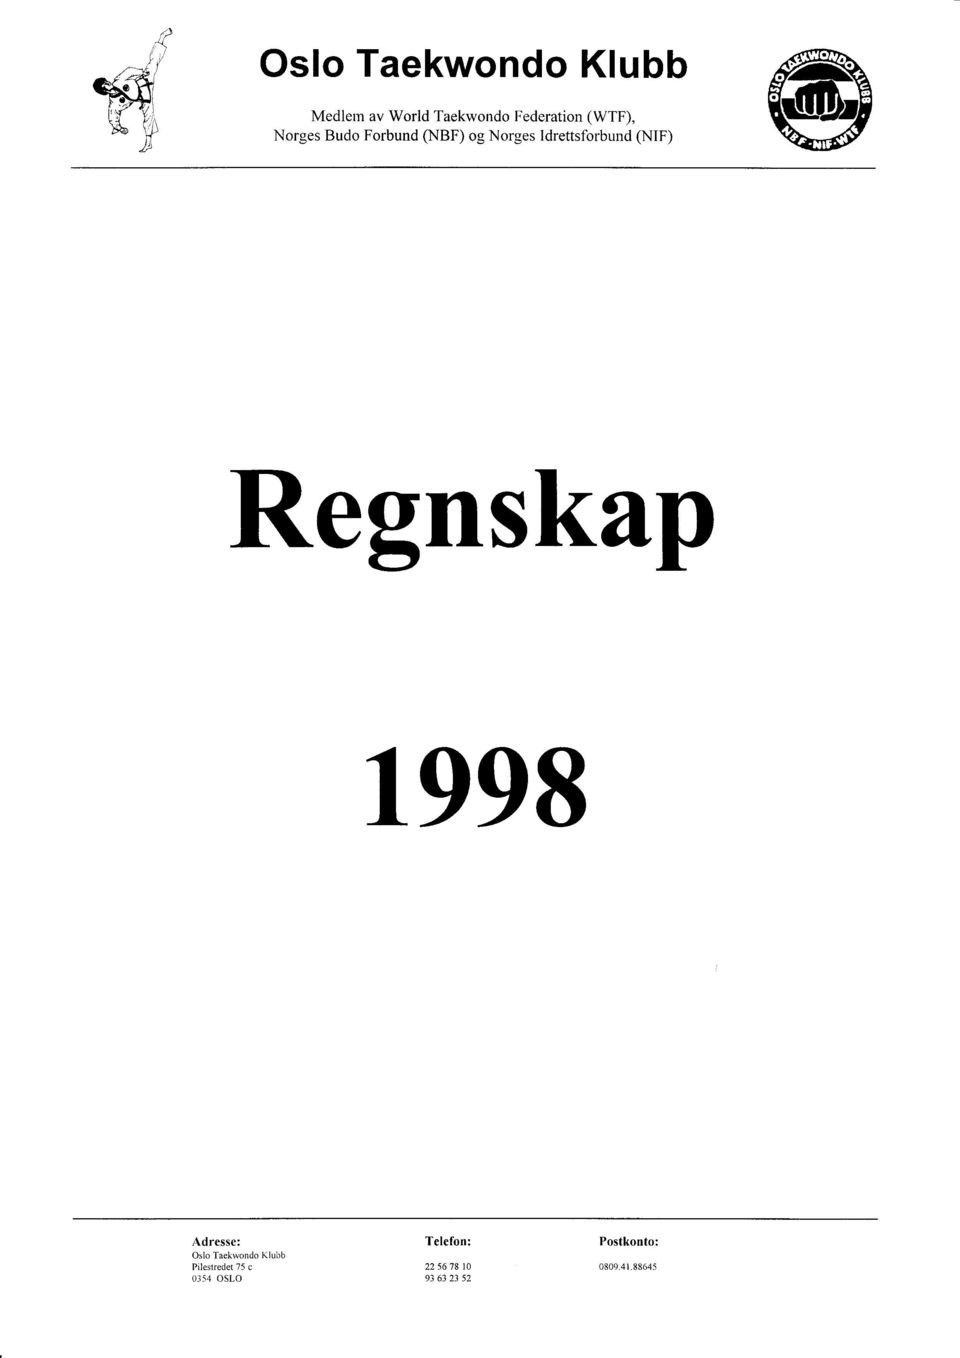 (NIF) RegnskLp 1998 Adresse: Oslo Taekwondo Klubb Pilestredet